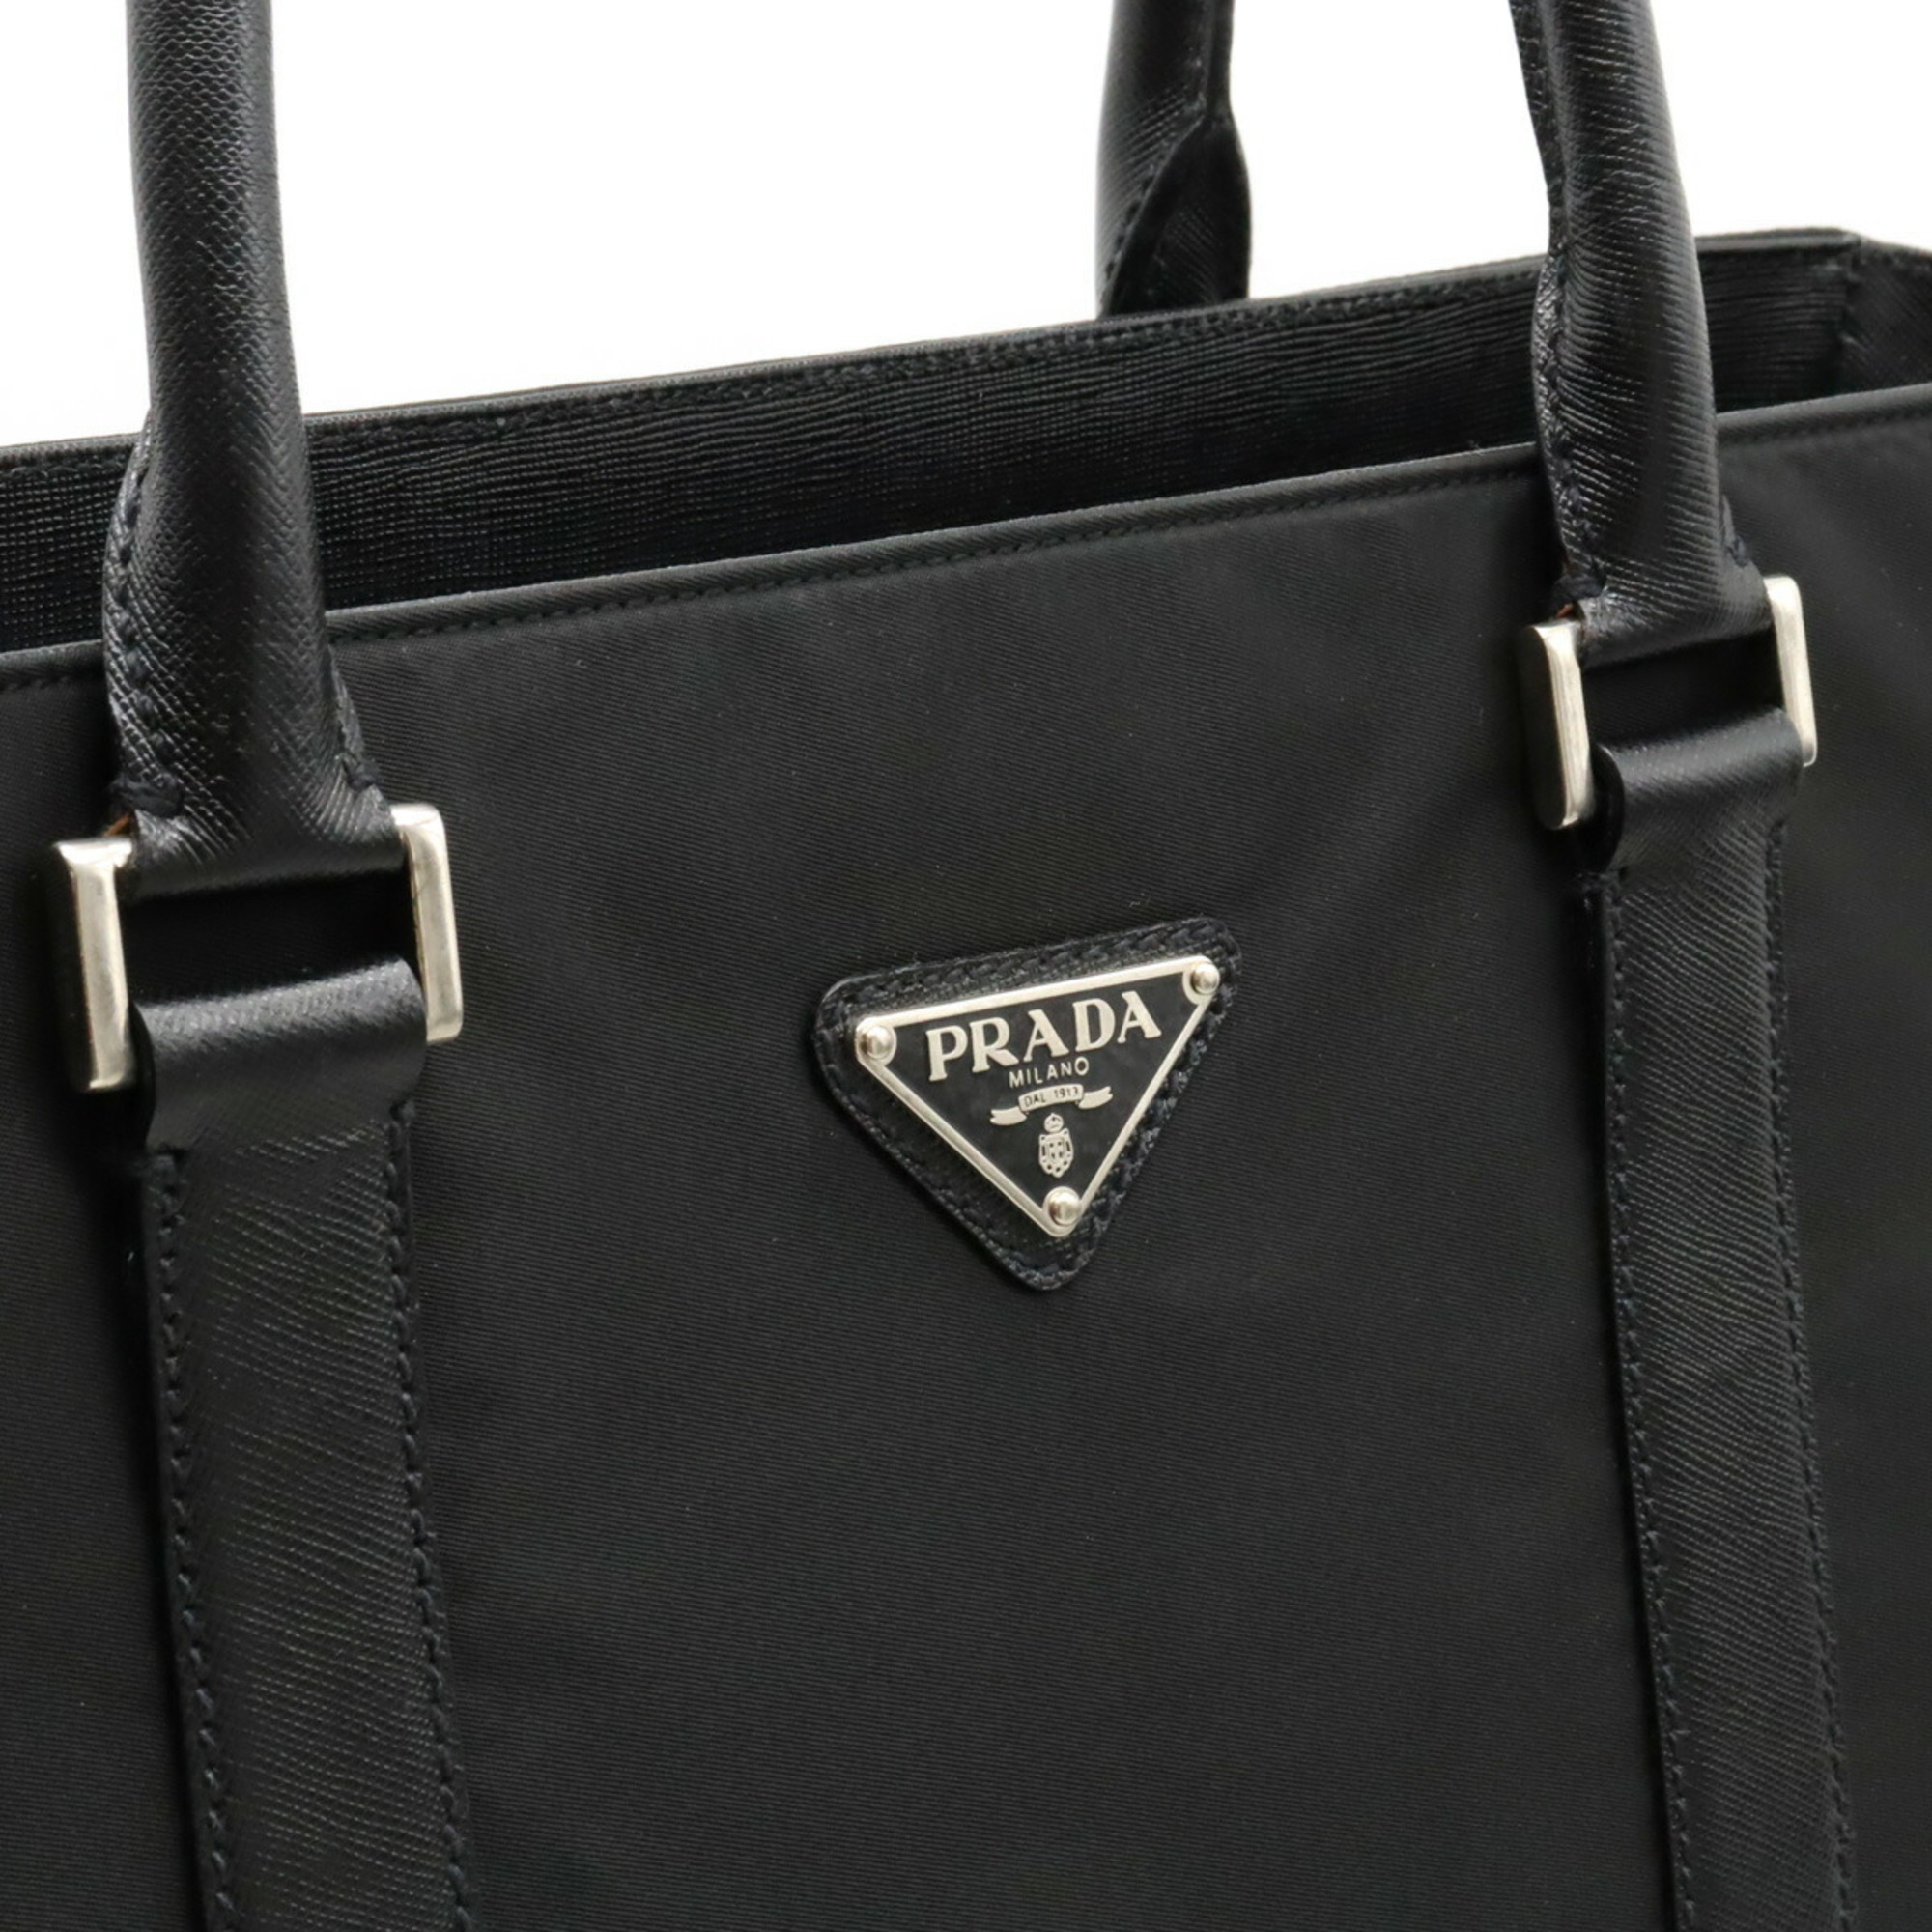 PRADA Prada VIAGGIO Tote Bag Handbag Nylon Leather NERO Black Purchased from an overseas outlet VA0048